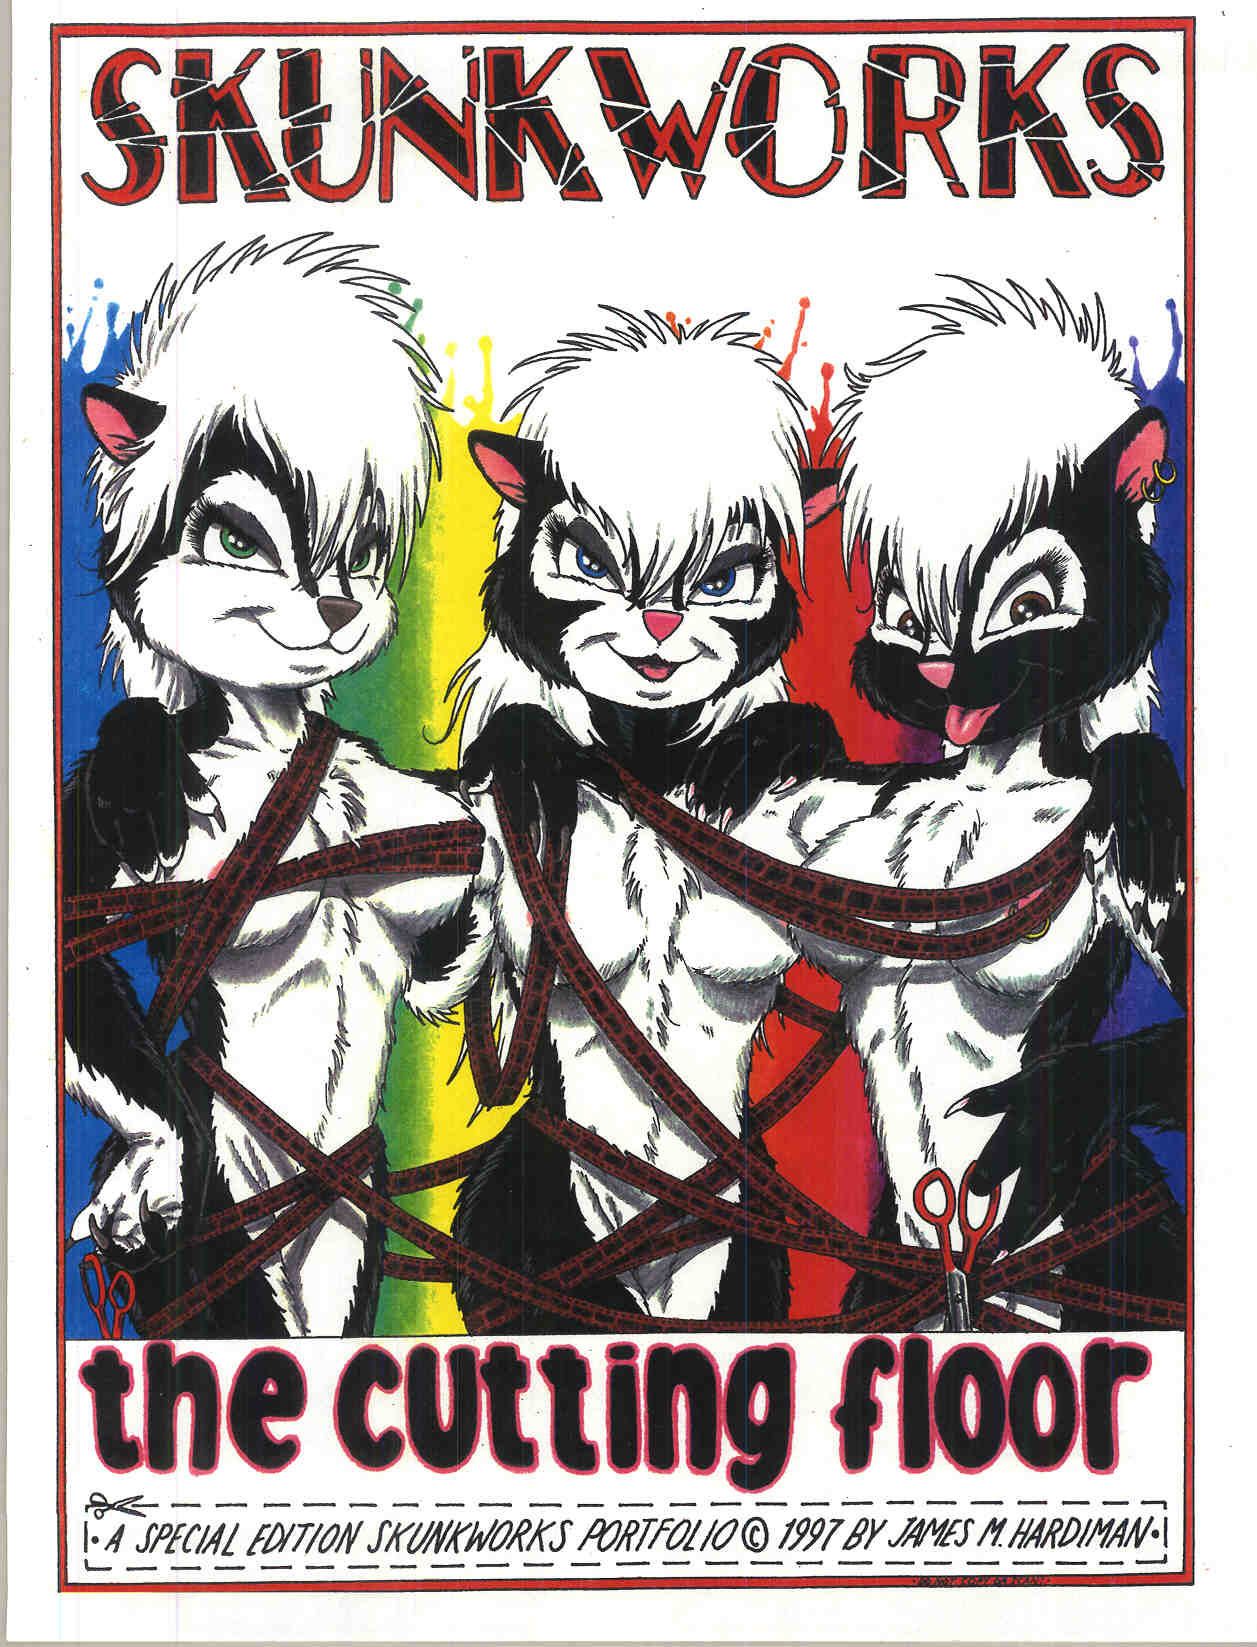 Skunkworks (James Hardiman) The Cutting Floor